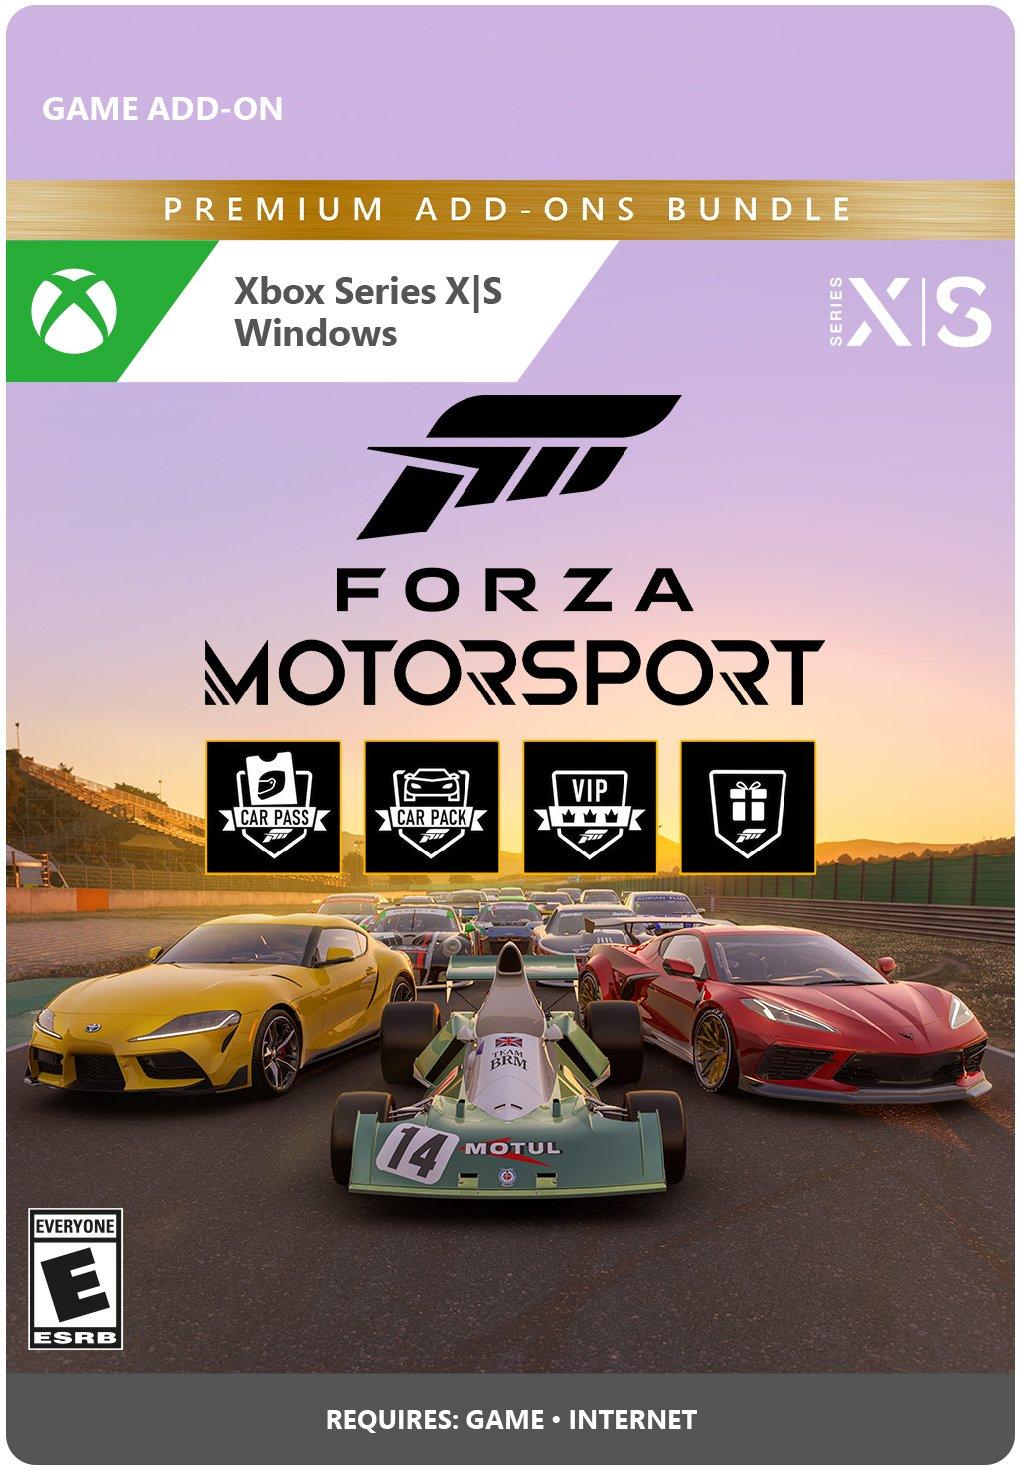 Forza Motorsport: Premium Add-Ons Bundle DLC - Xbox Series X/S, Windows, Xbox Series X